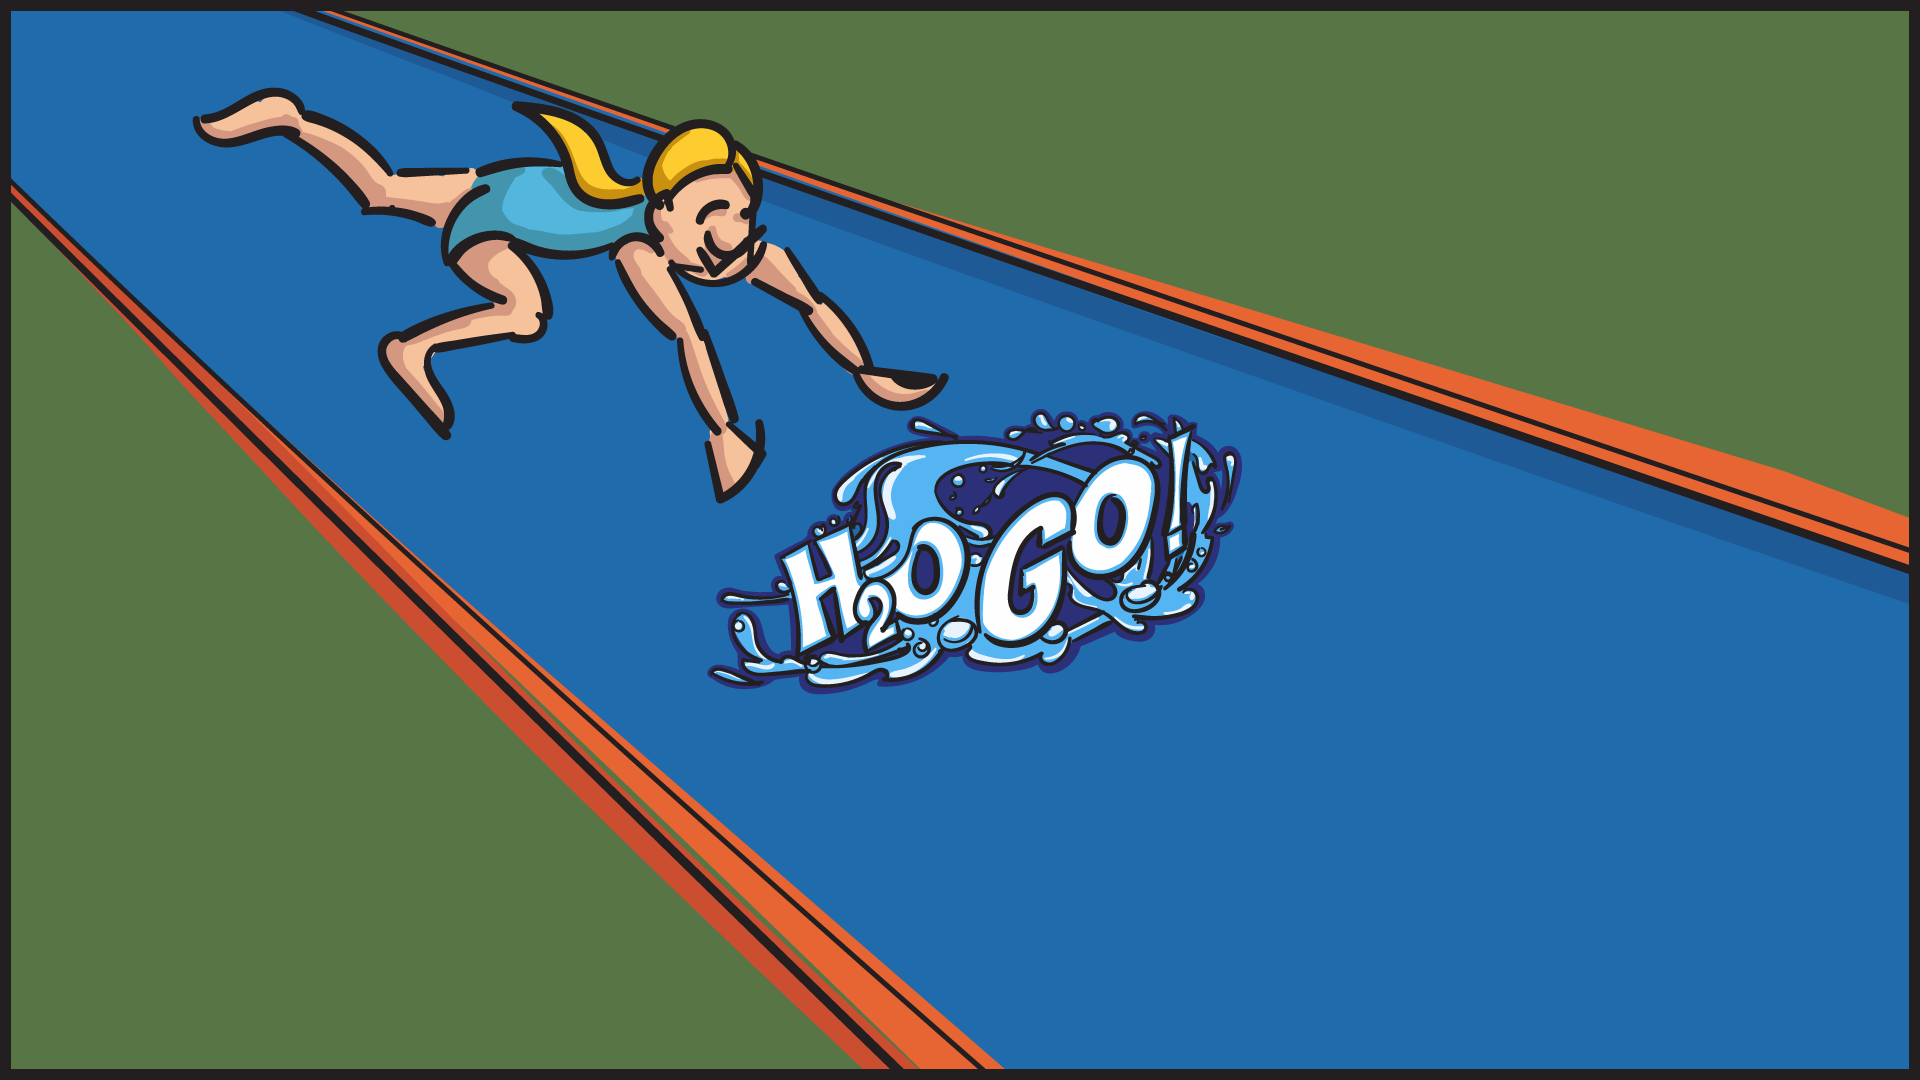 H2O_Go_Storyboards_Panel_14cc_Color_ALT.png